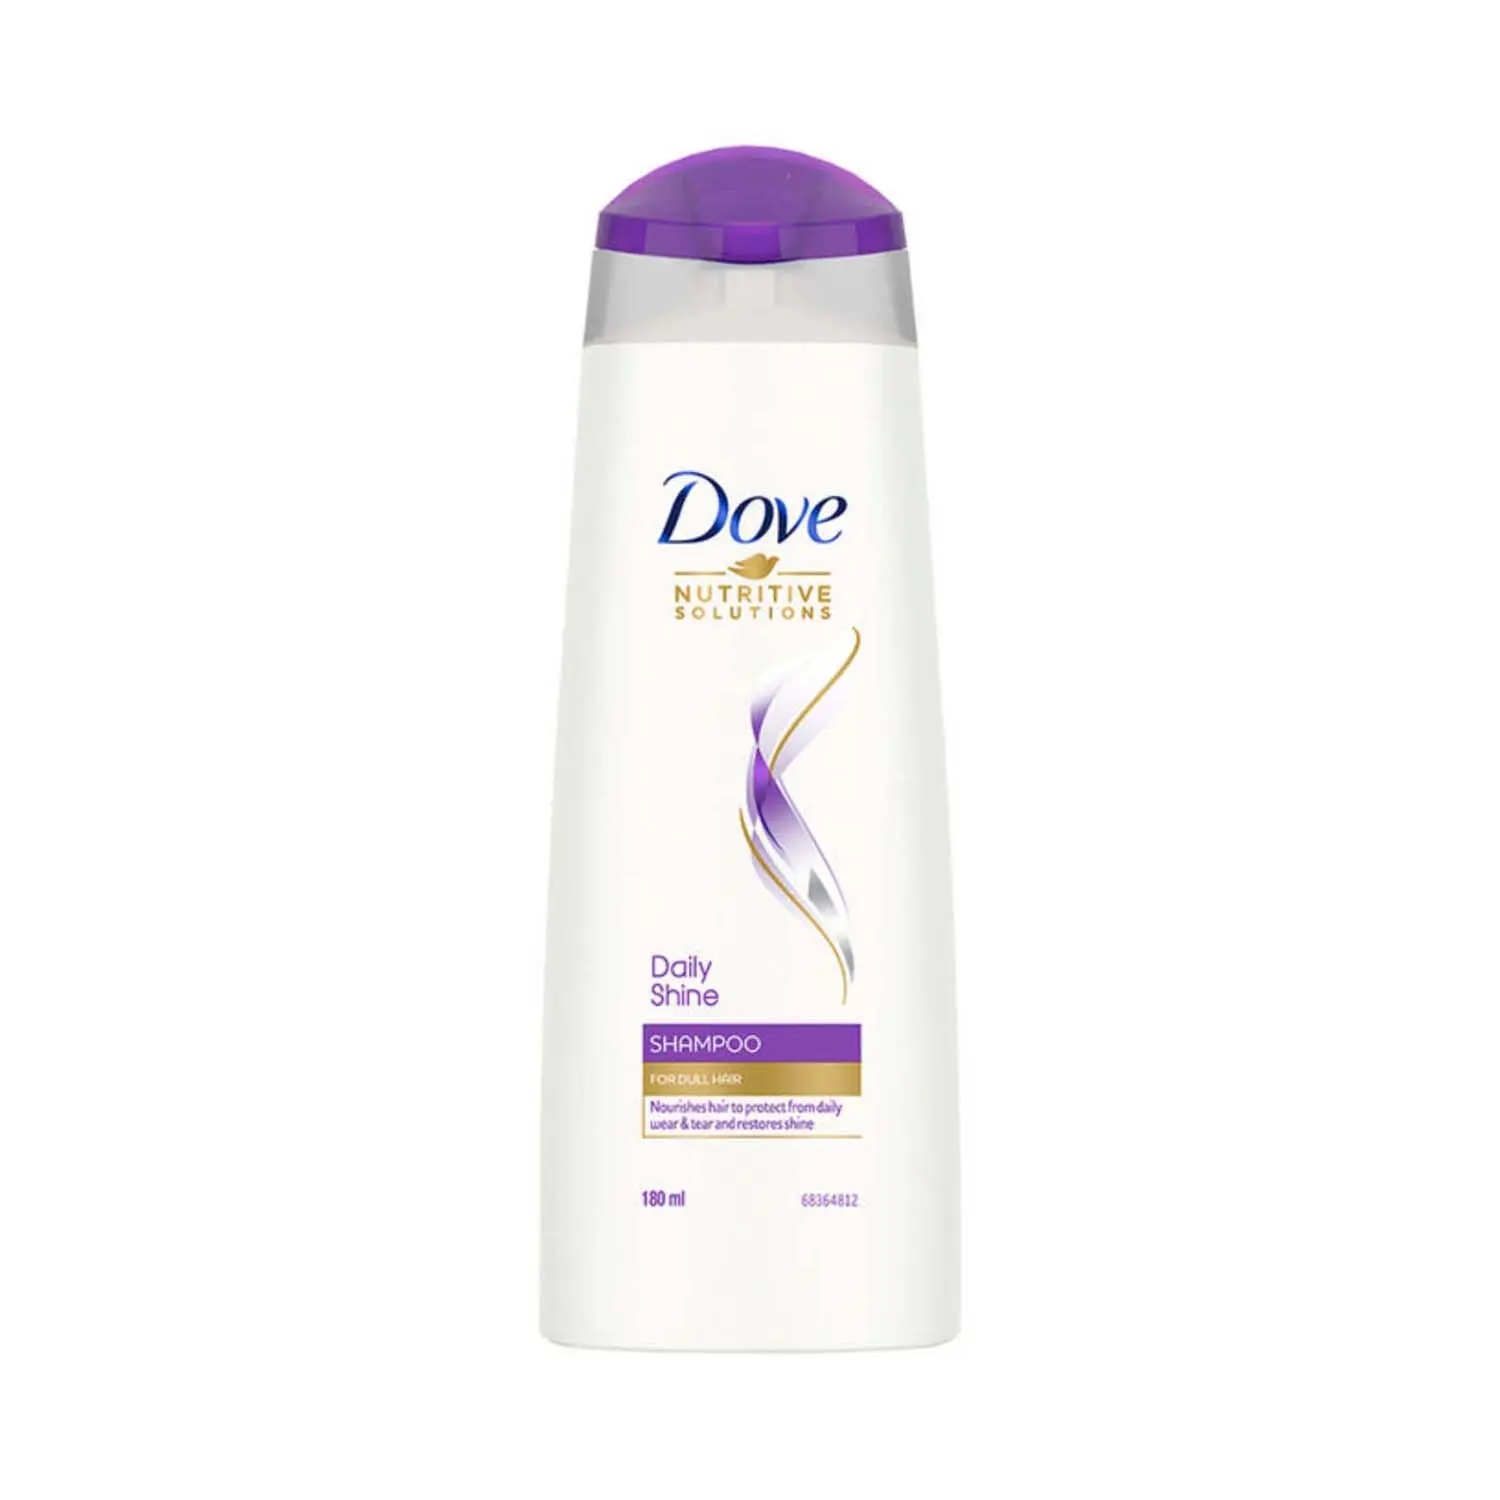 Dove | Dove Daily Shine Hair Shampoo (180ml)